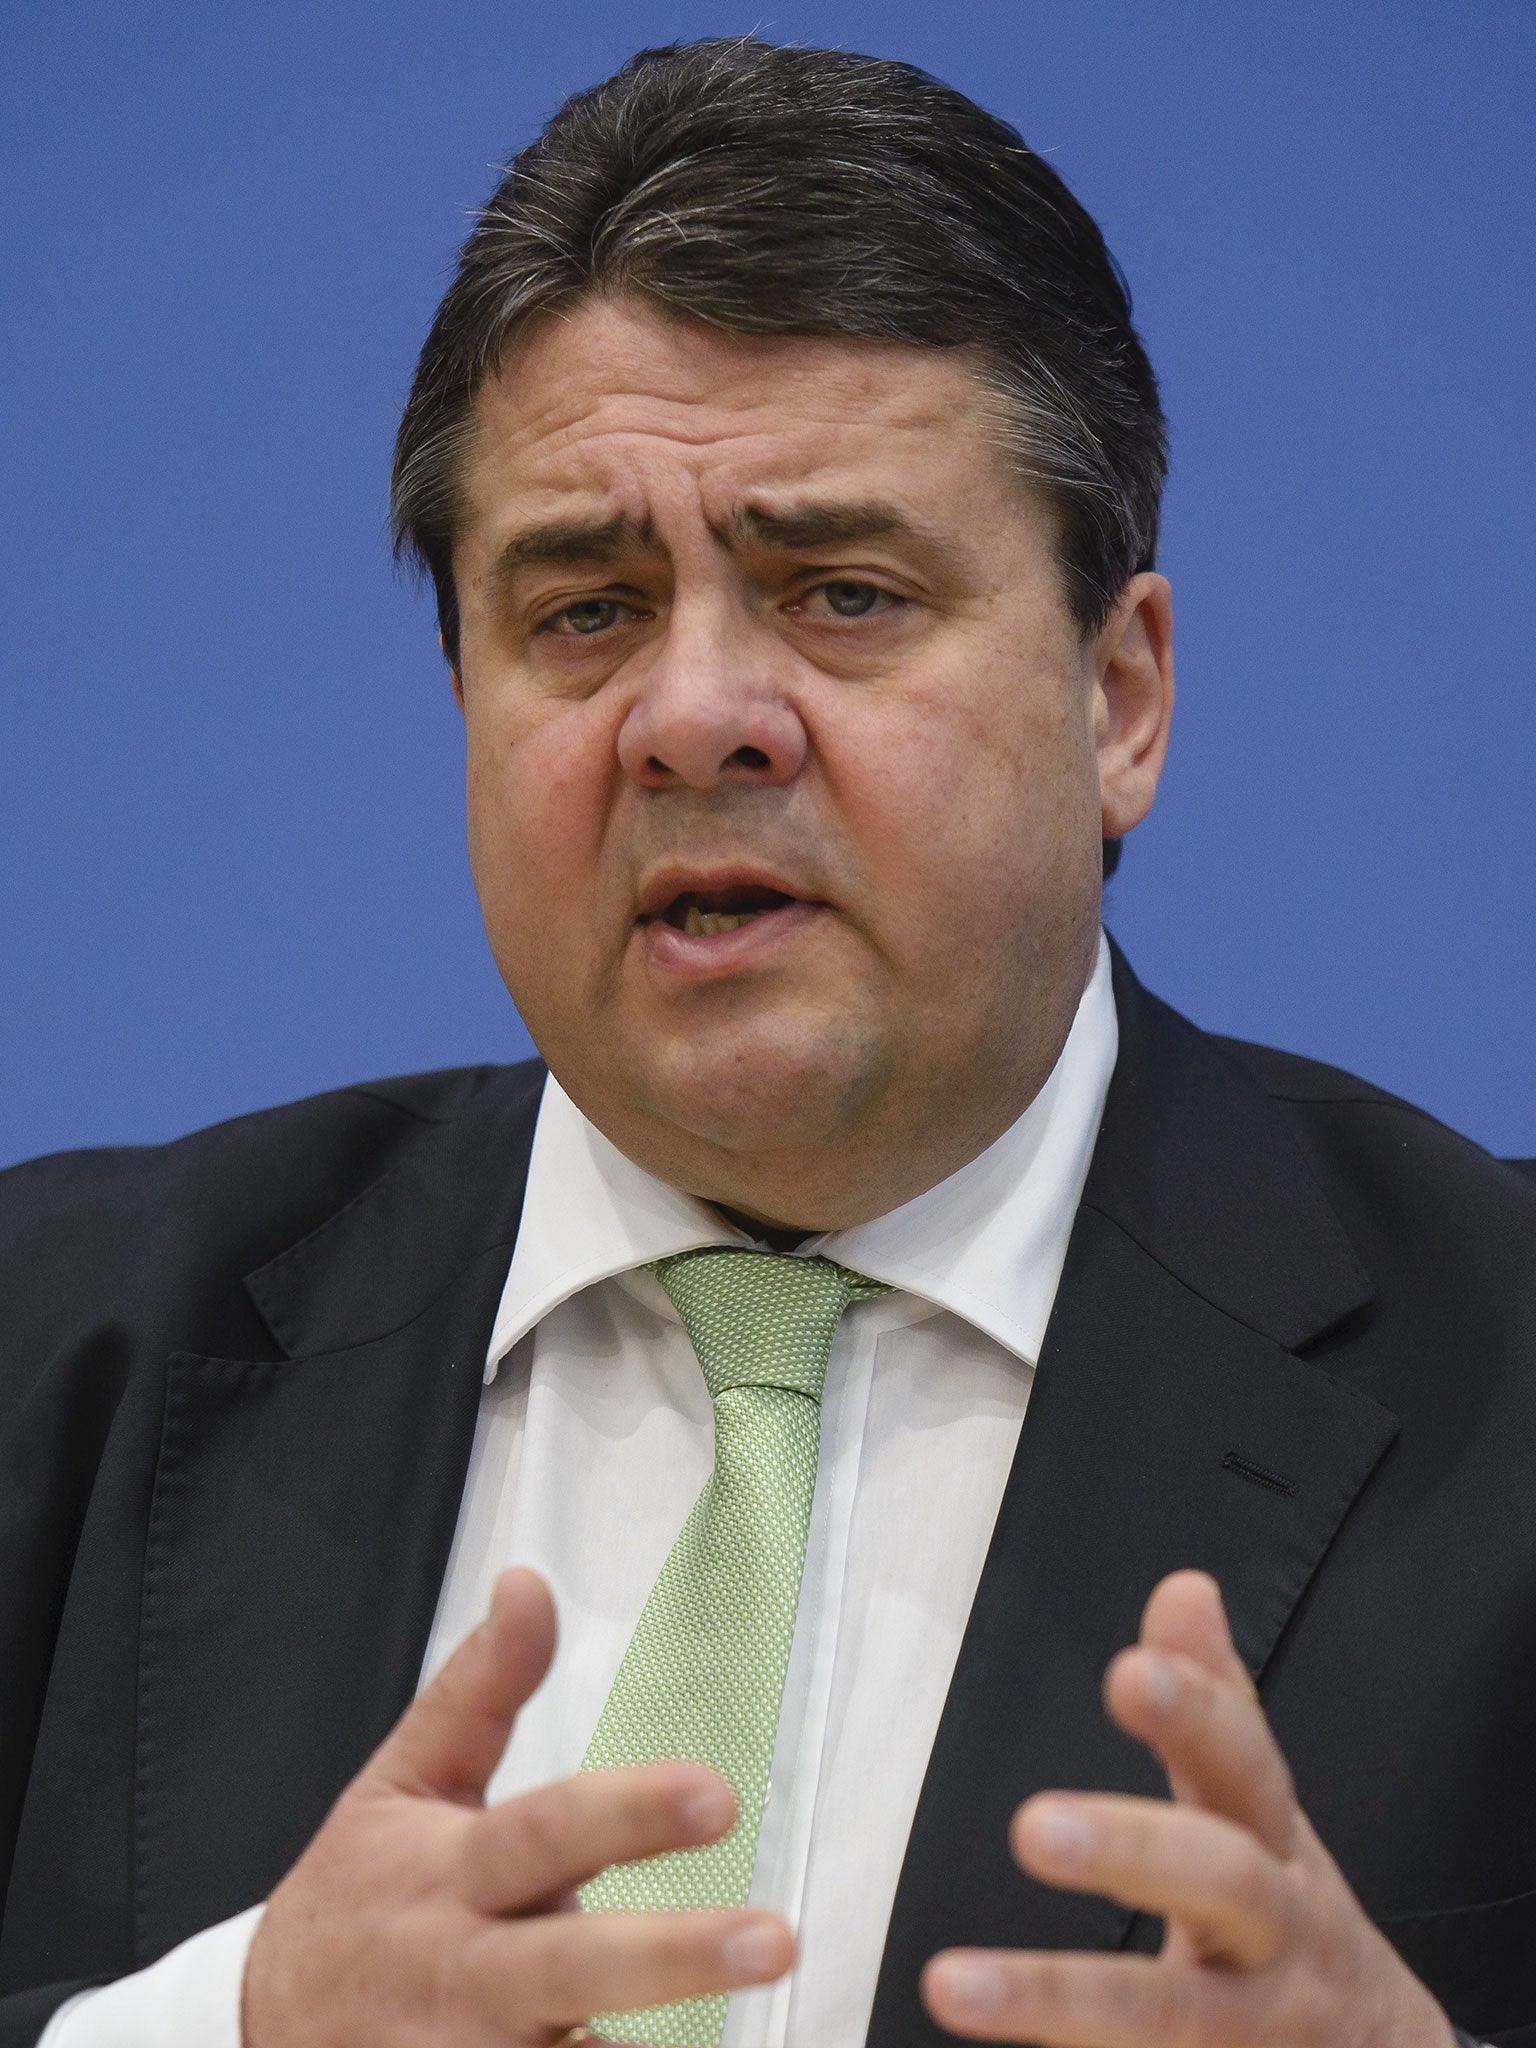 Sigmar Gabriel’s popularity falls ways behind Merkel’s